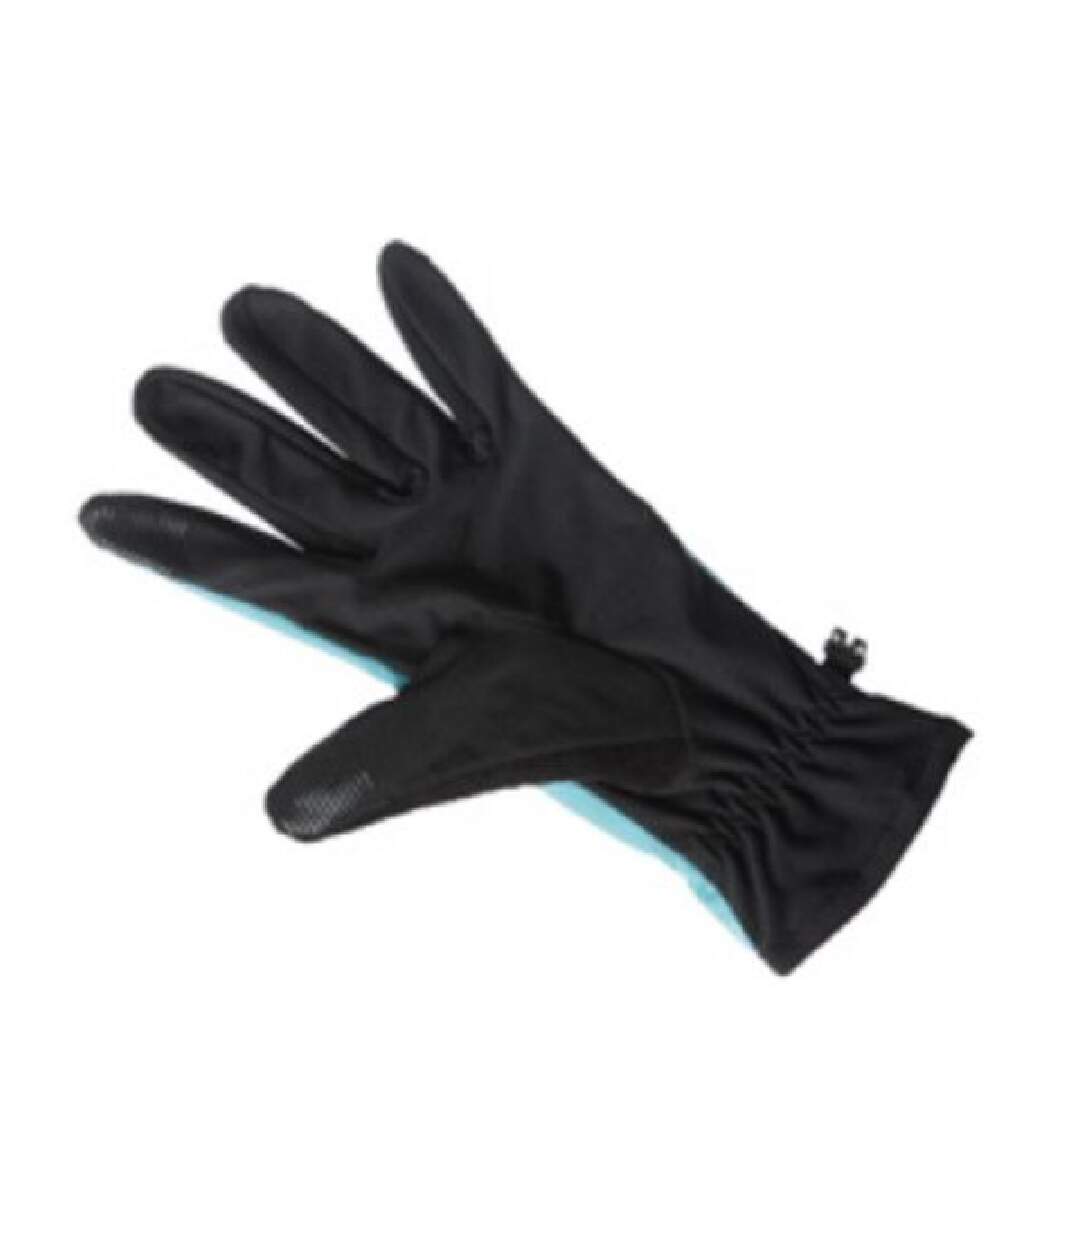 Asics Adult Unisex Two Tone Winter Gloves () ()